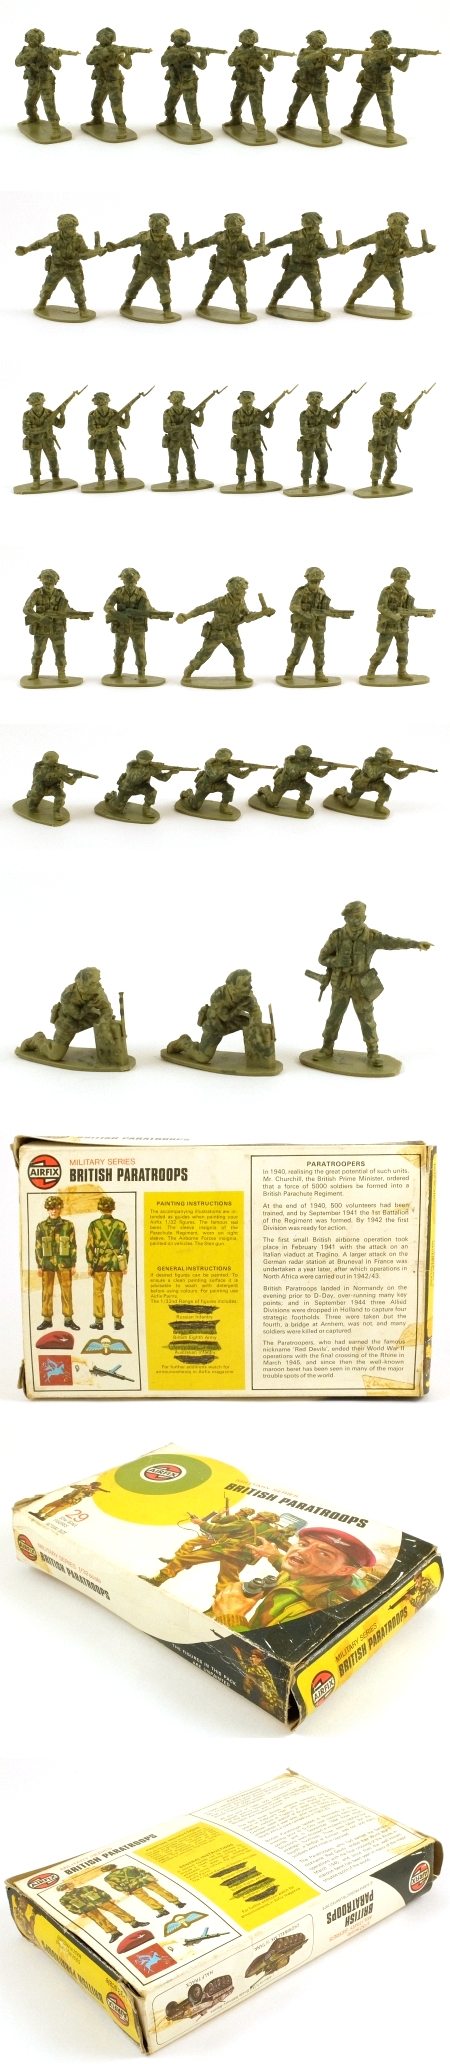 51450-9 British Paratroops x 29